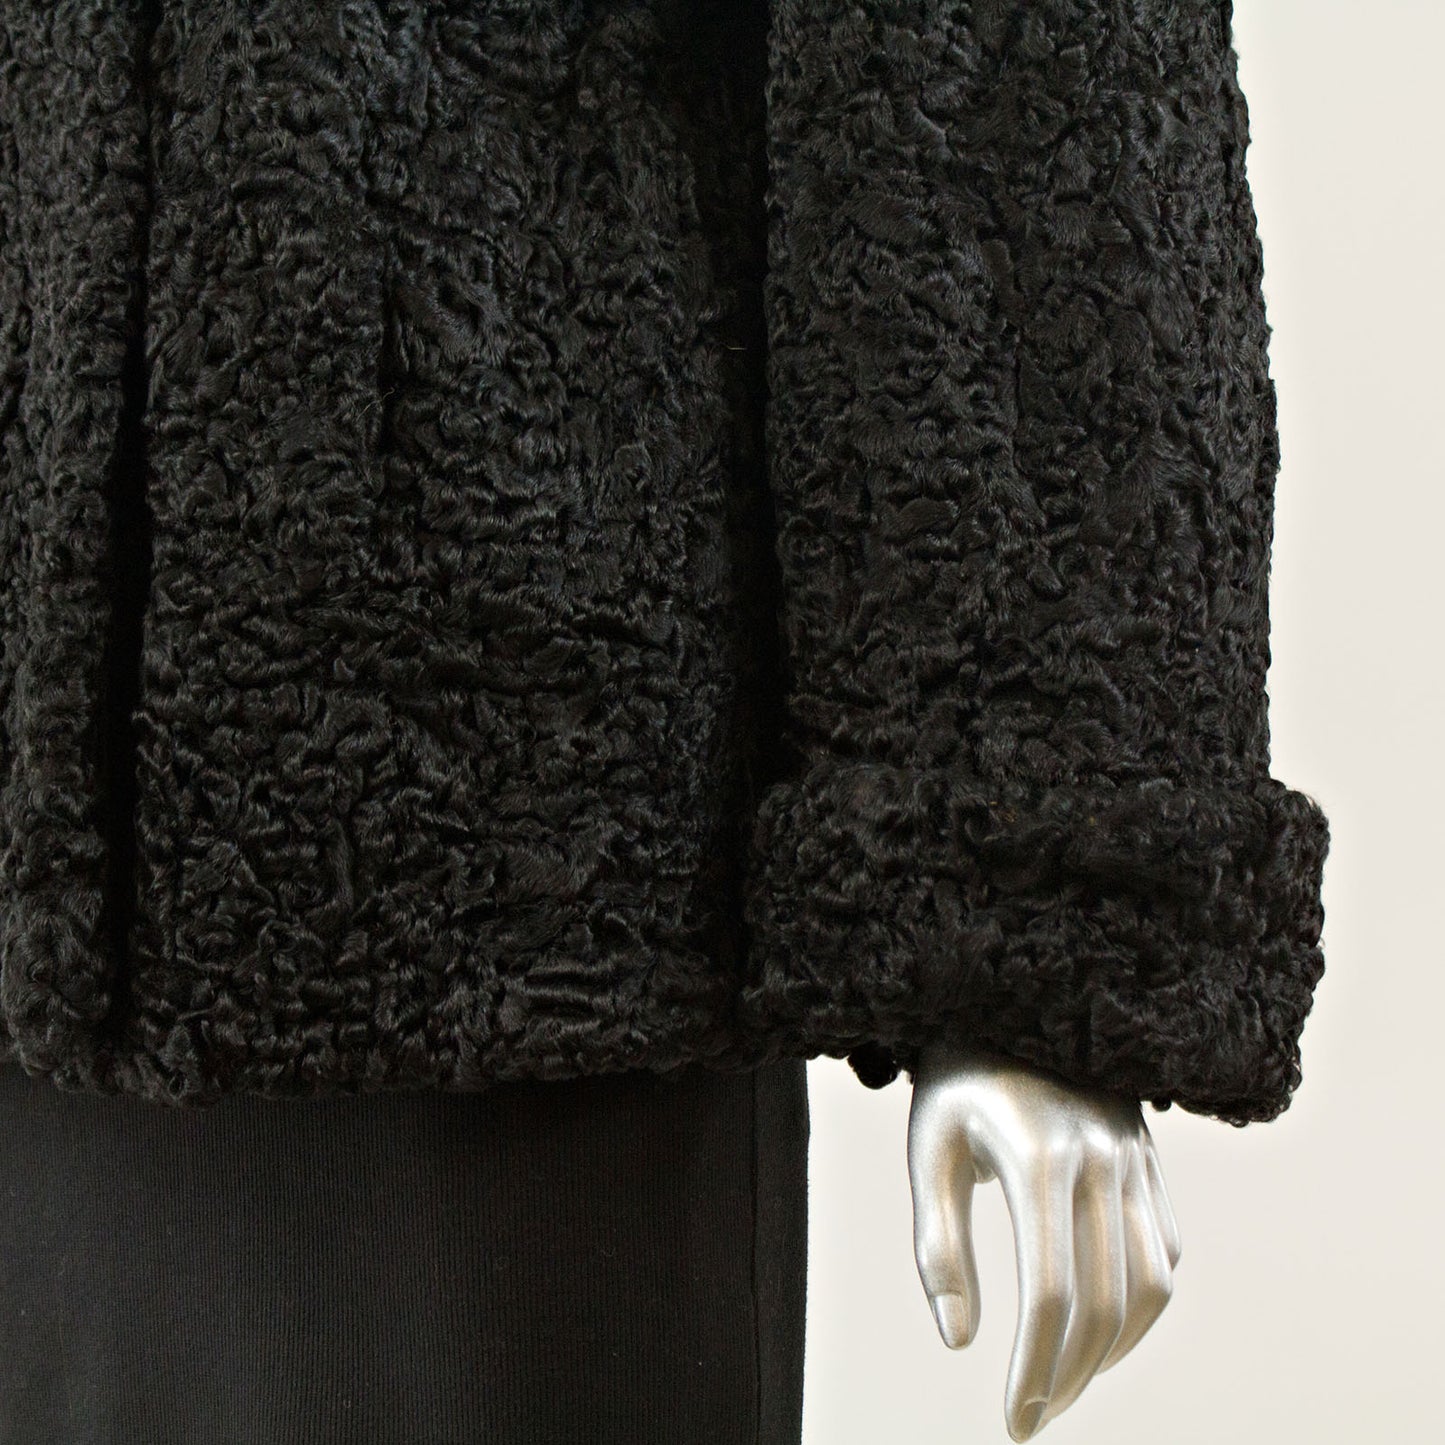 Black Persian Lamb Jacket - Size M-L (Vintage Furs)